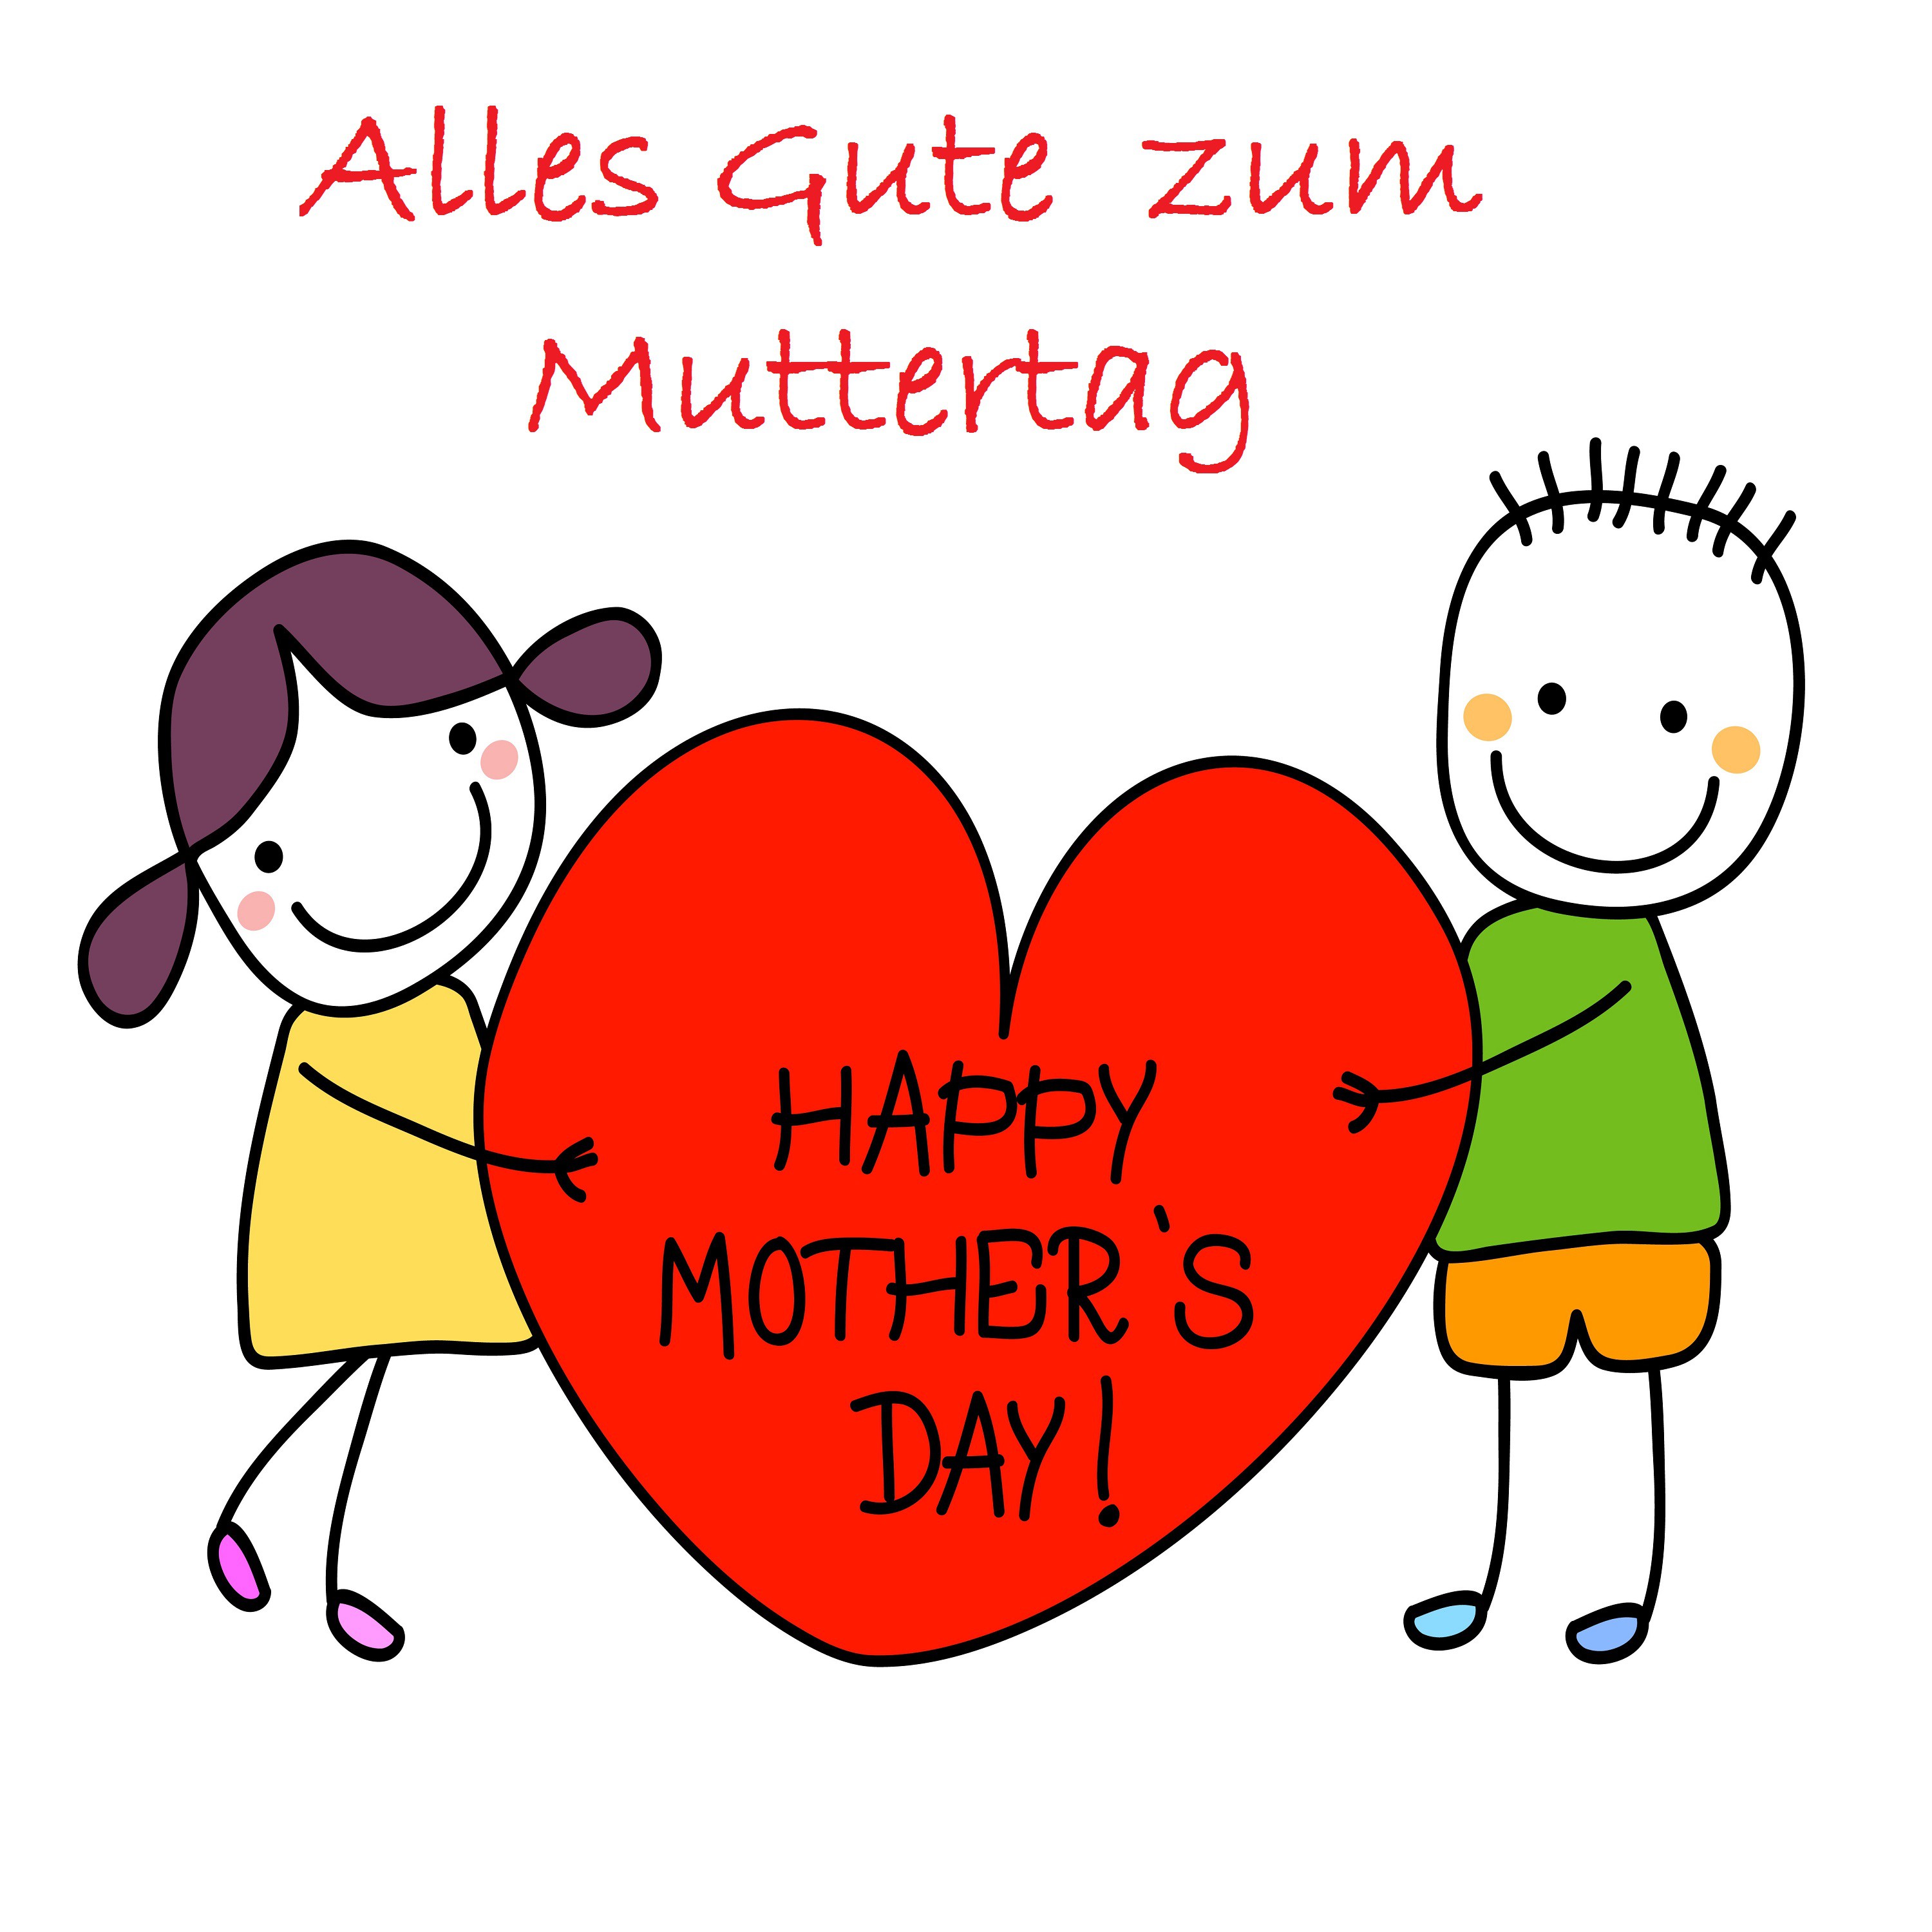 Top 30: Alles Gute zum Muttertag - Happy Mother's Day!